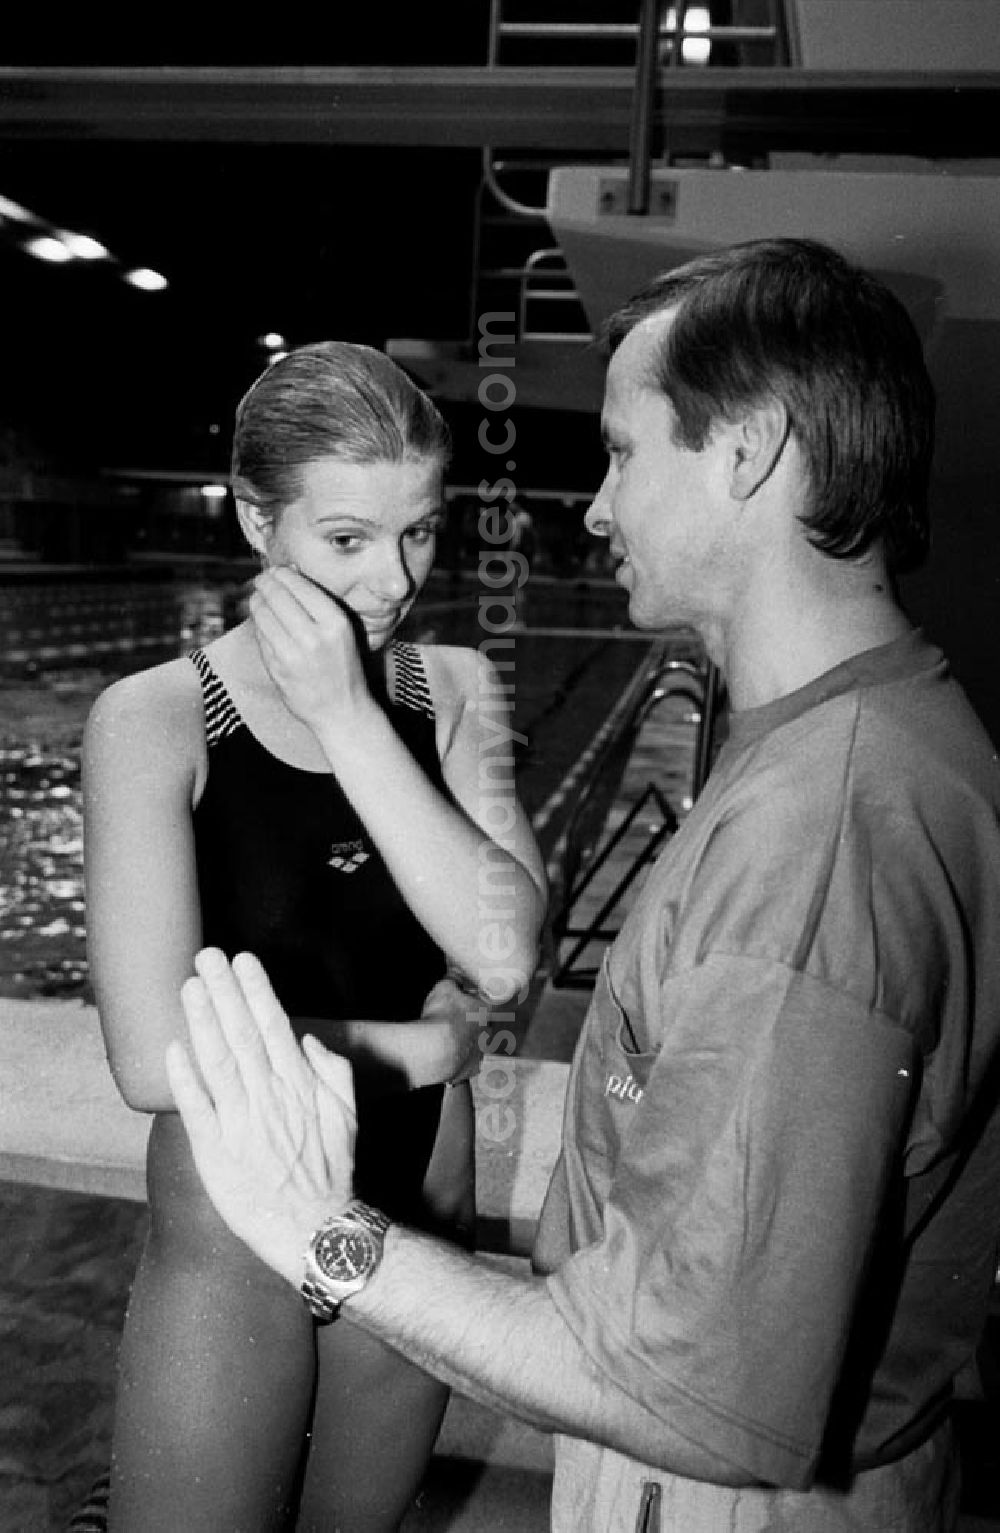 GDR image archive: Berlin - Simone Koch mit Trainer 14.12.92